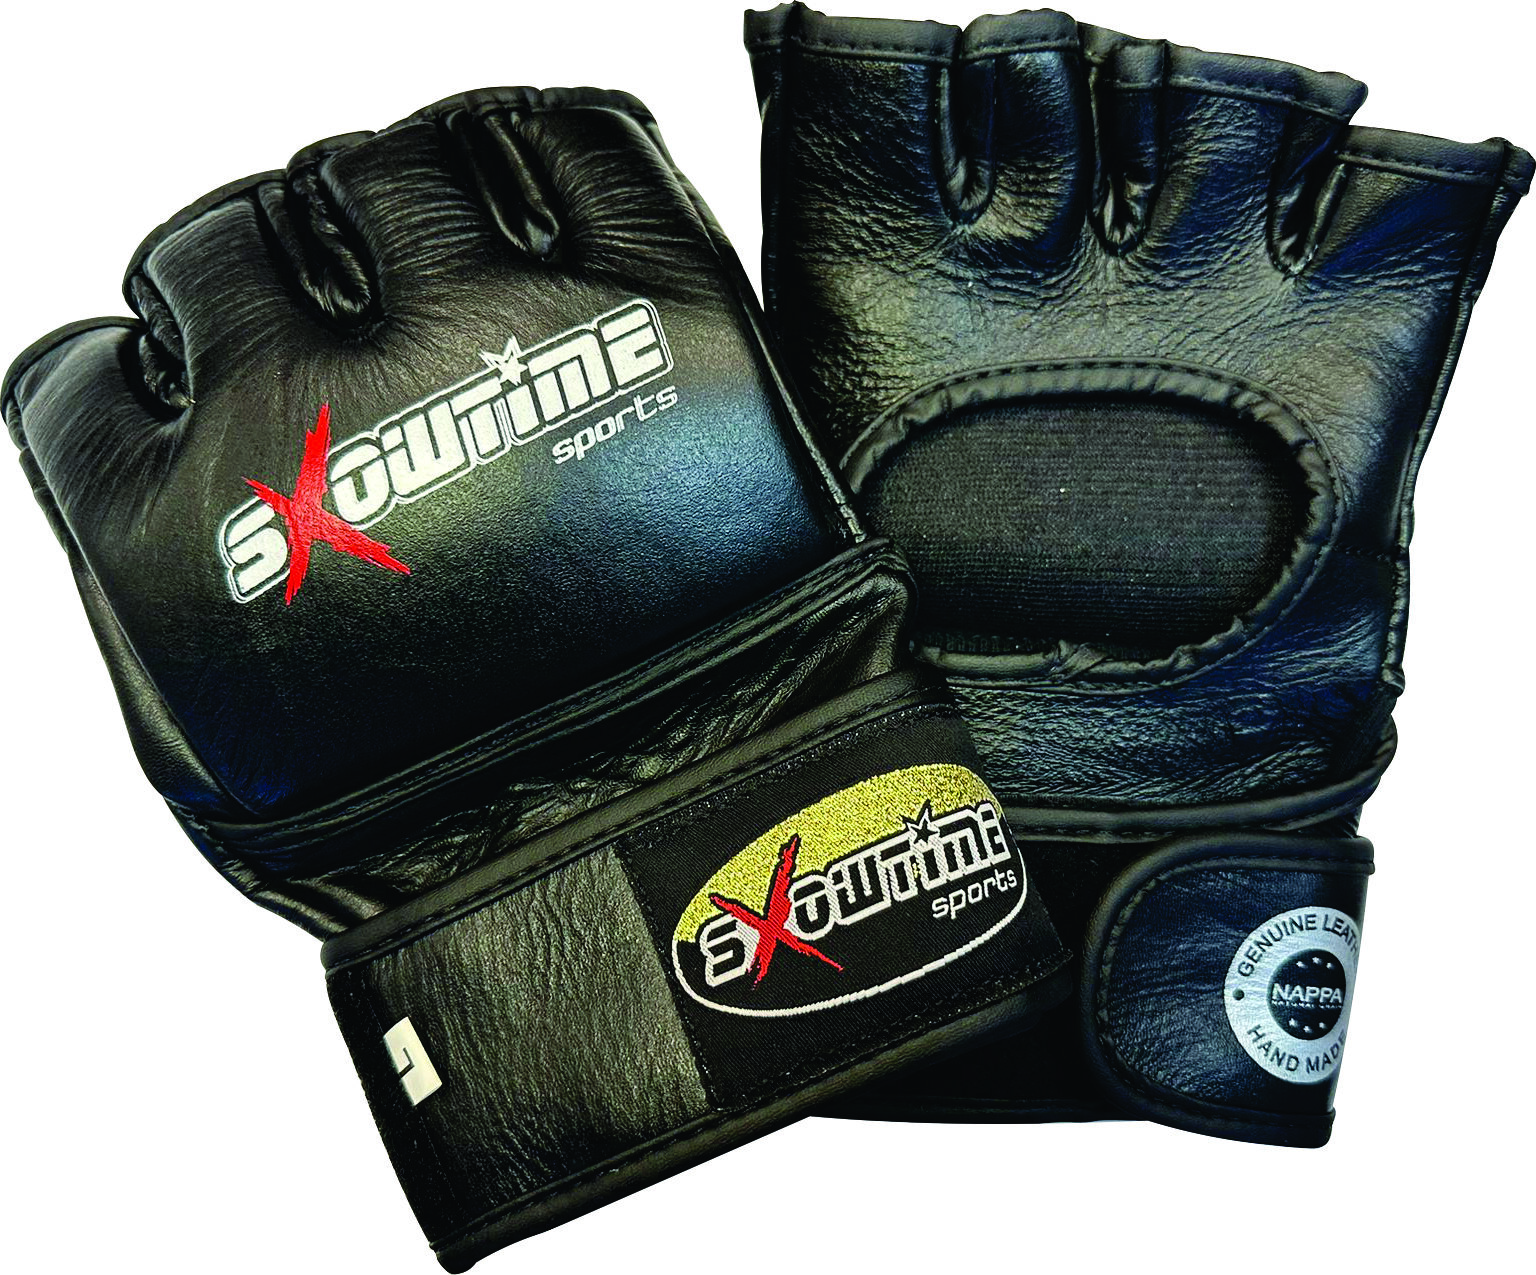 MMA Gloves in Genuine Leather 5oz to 6oz